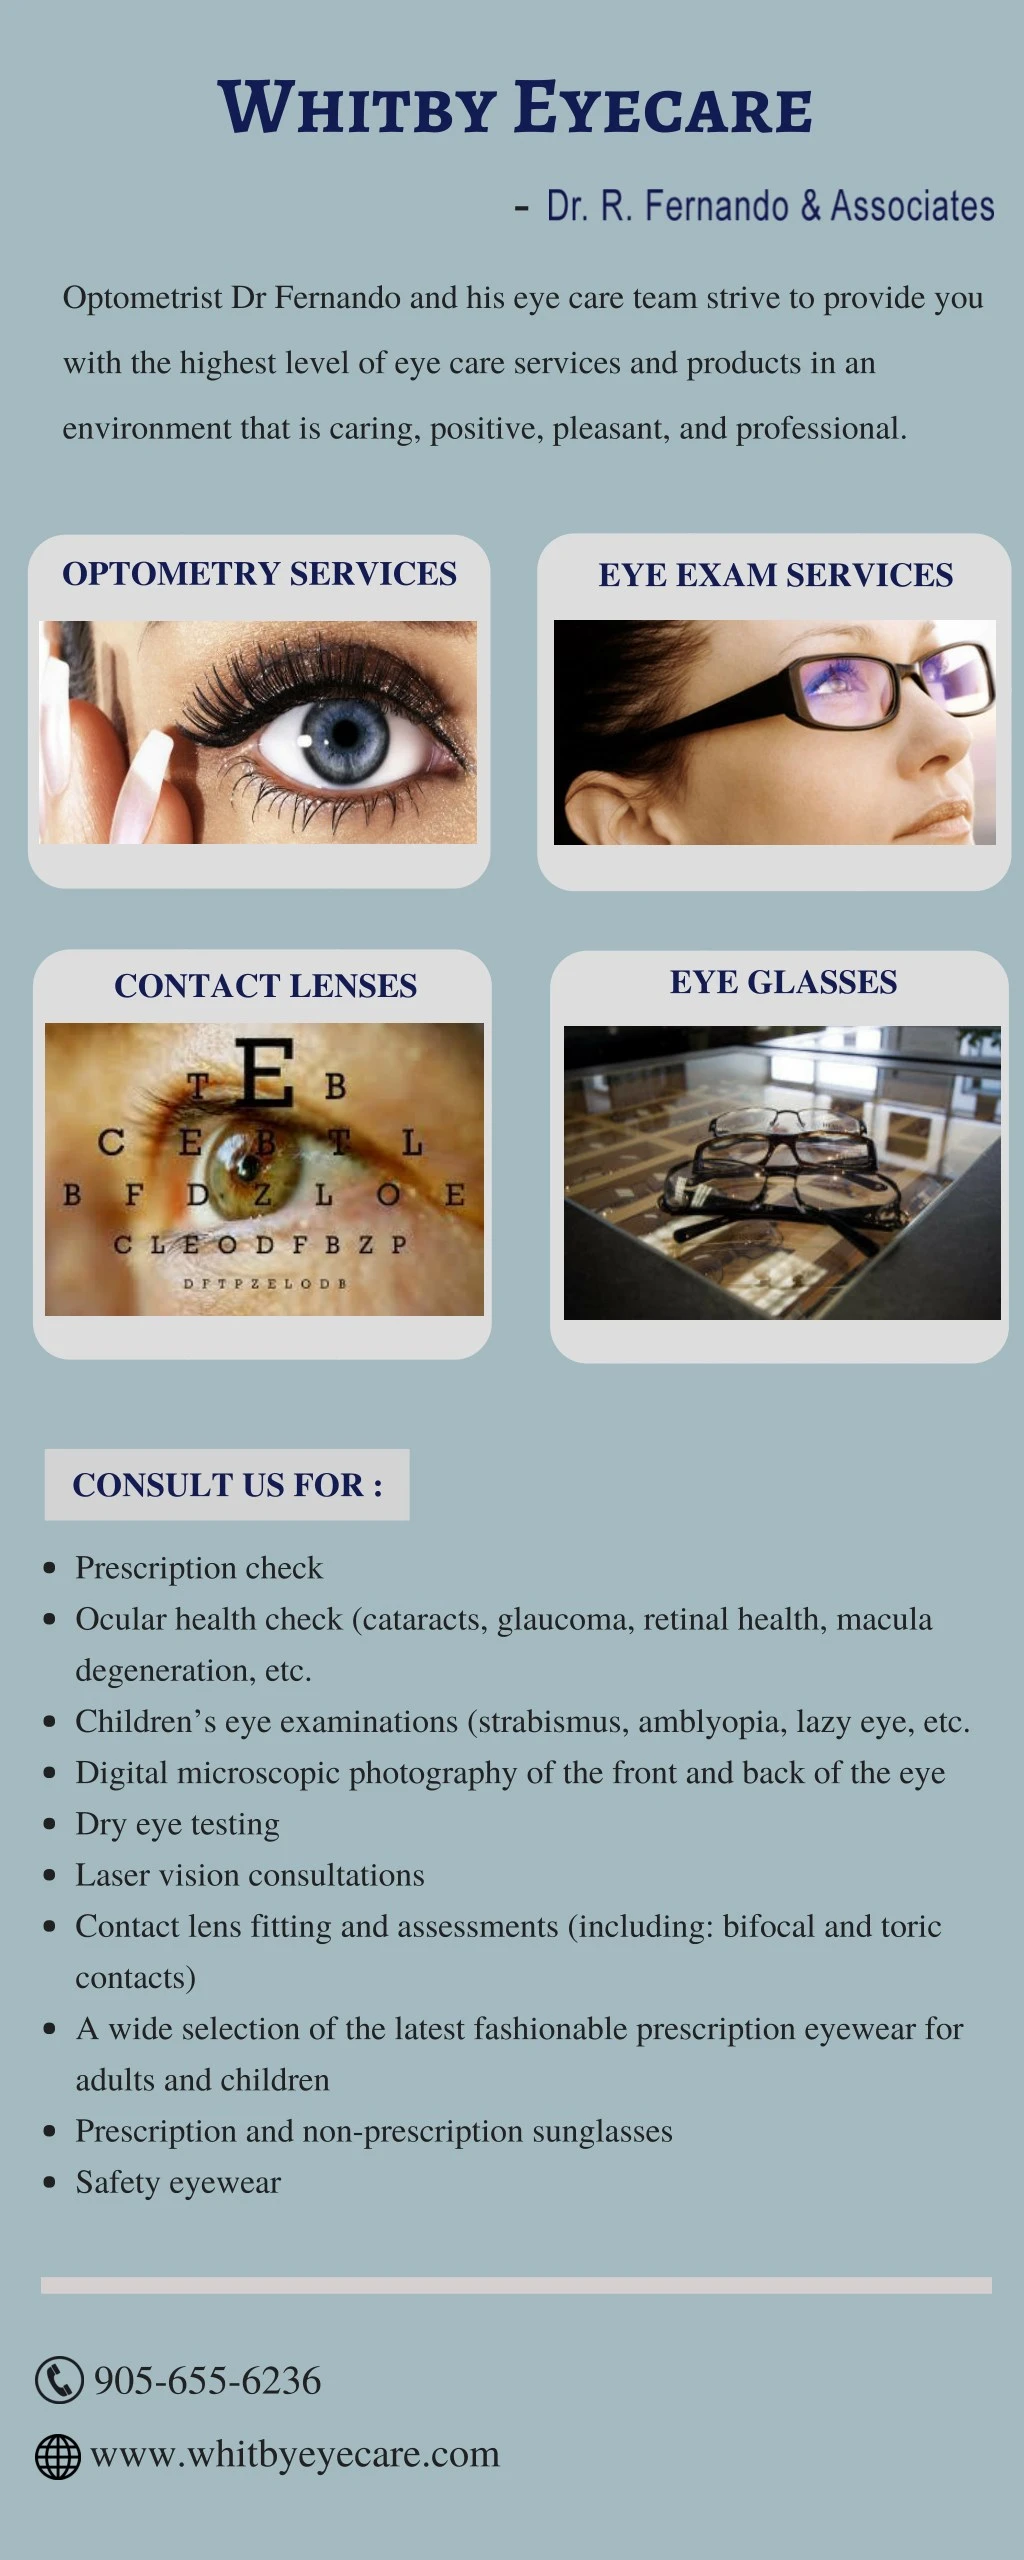 whitby eyecare